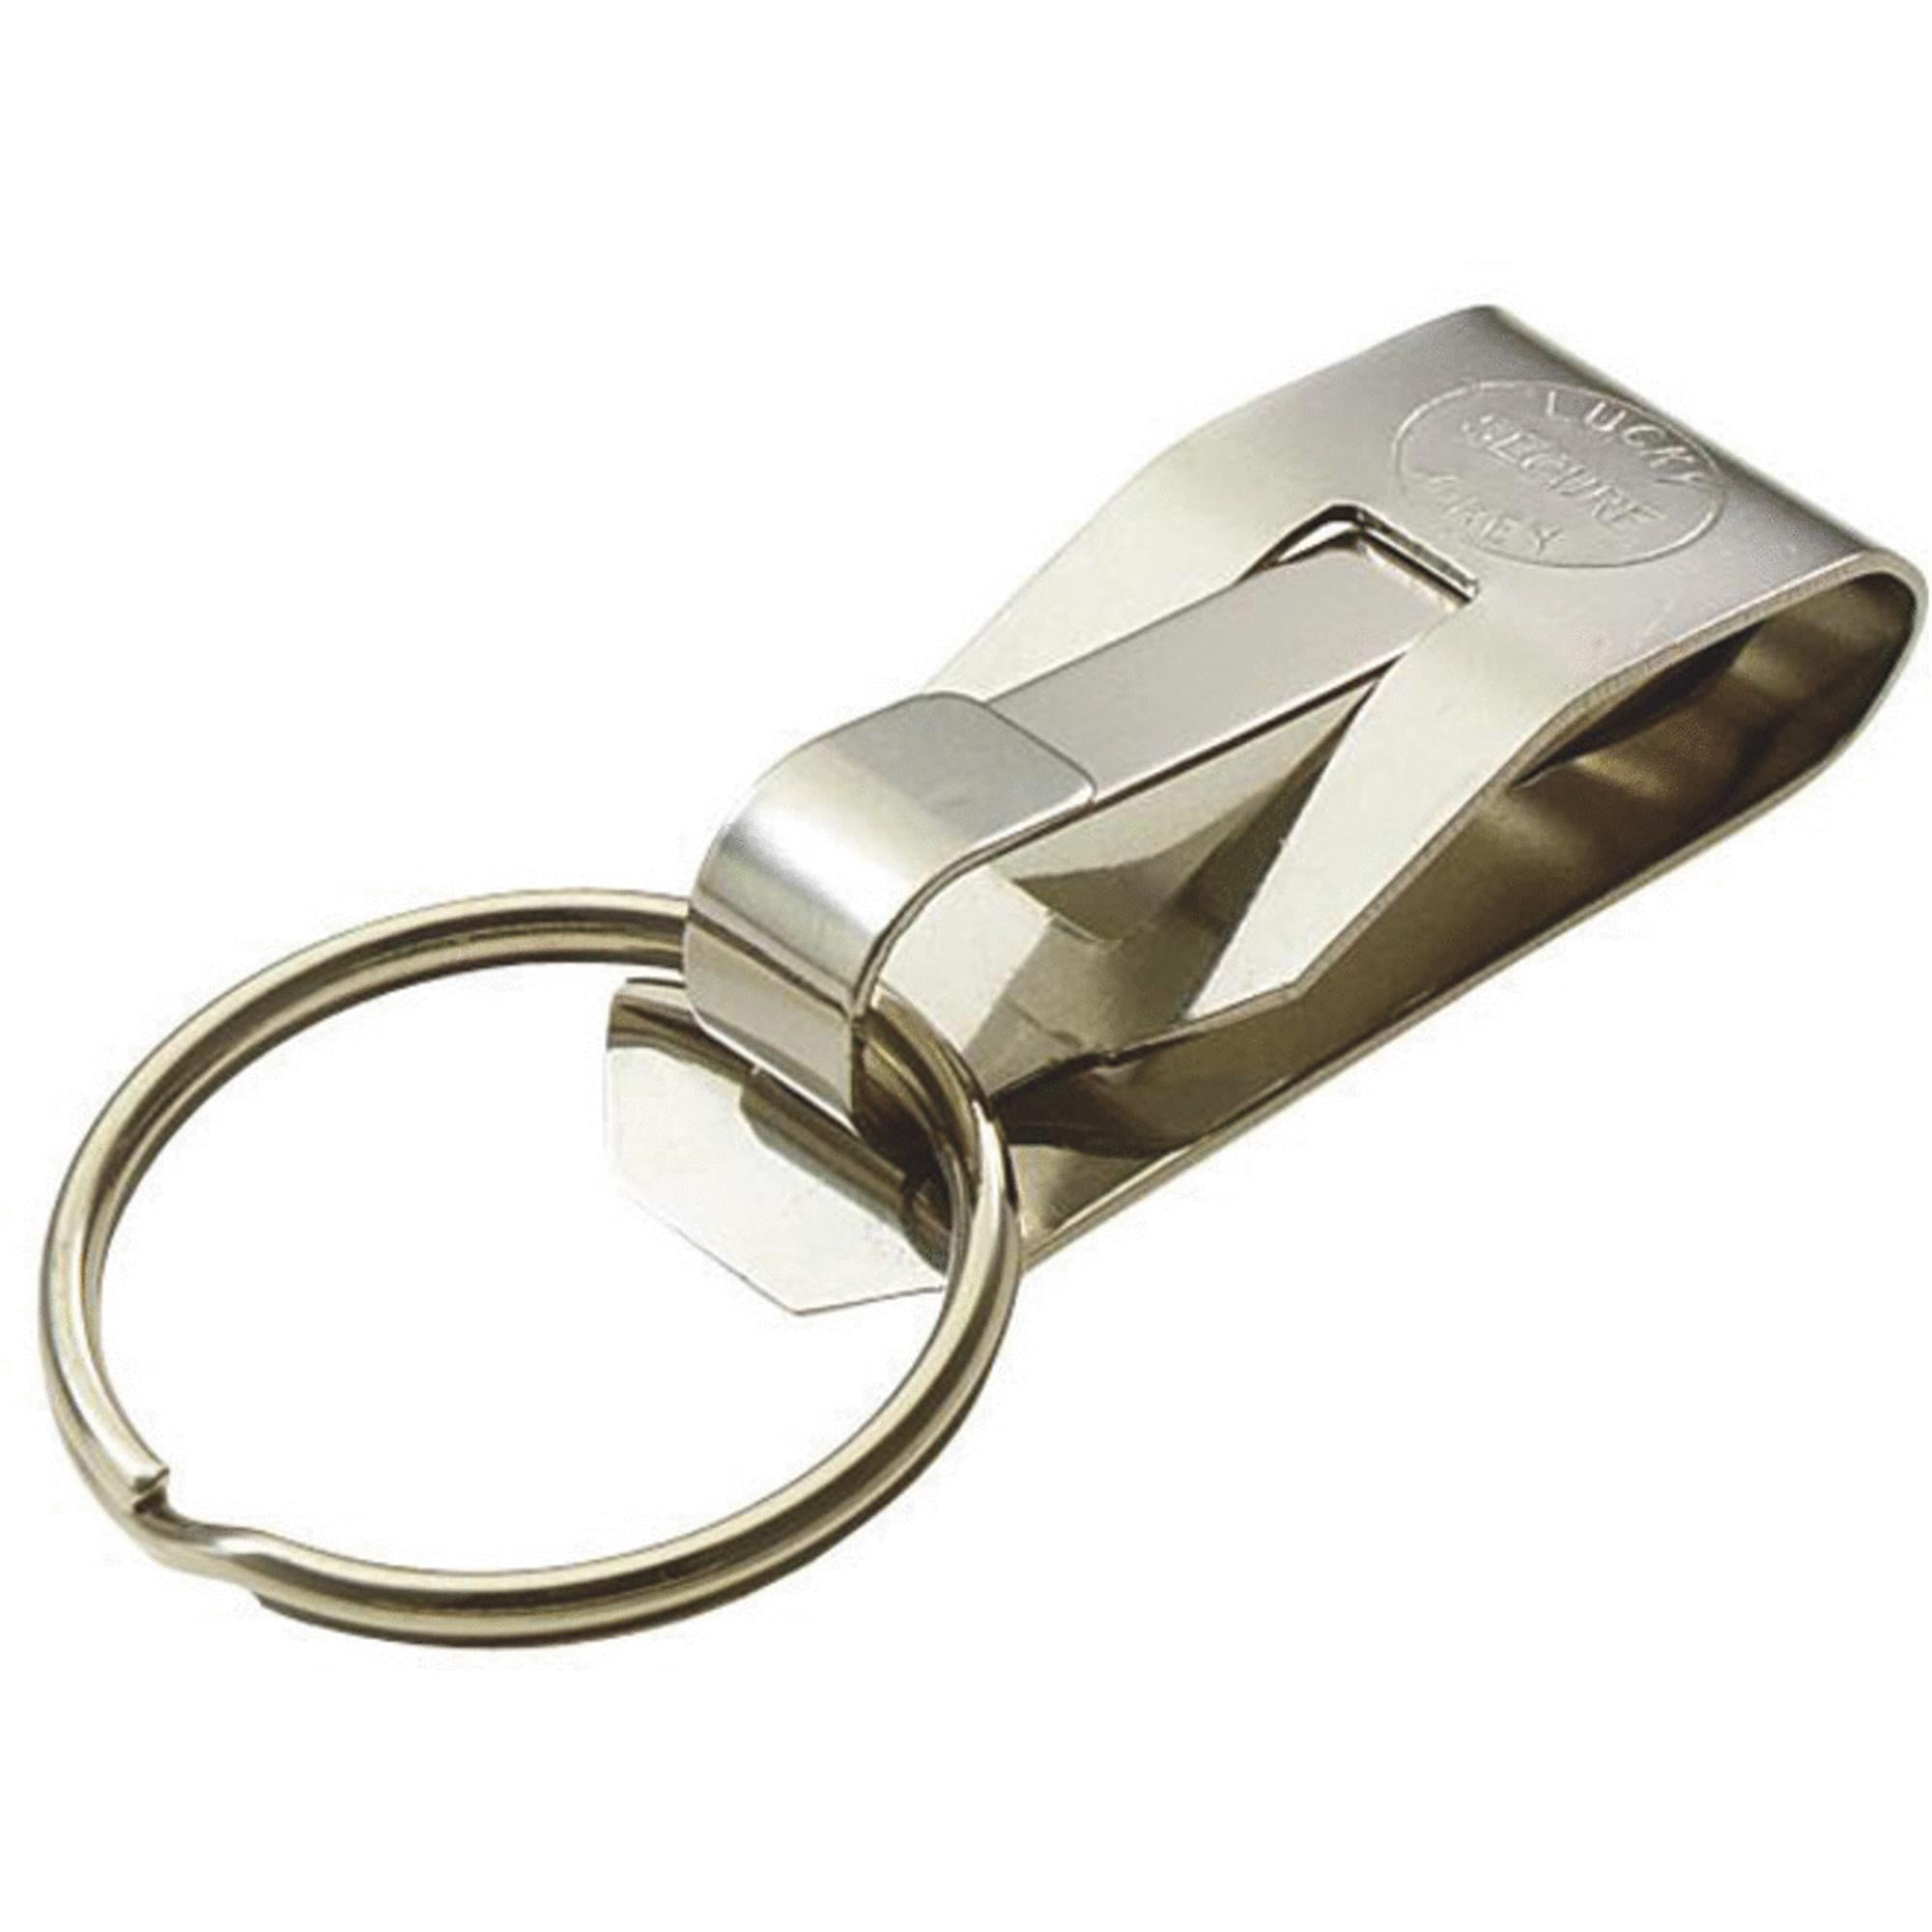  Bobino, Key Clip, Clip On Key Holder, Key Hook For Bag, Key  Clip For Purse, Key Holder For Keychain, Purse Accessories